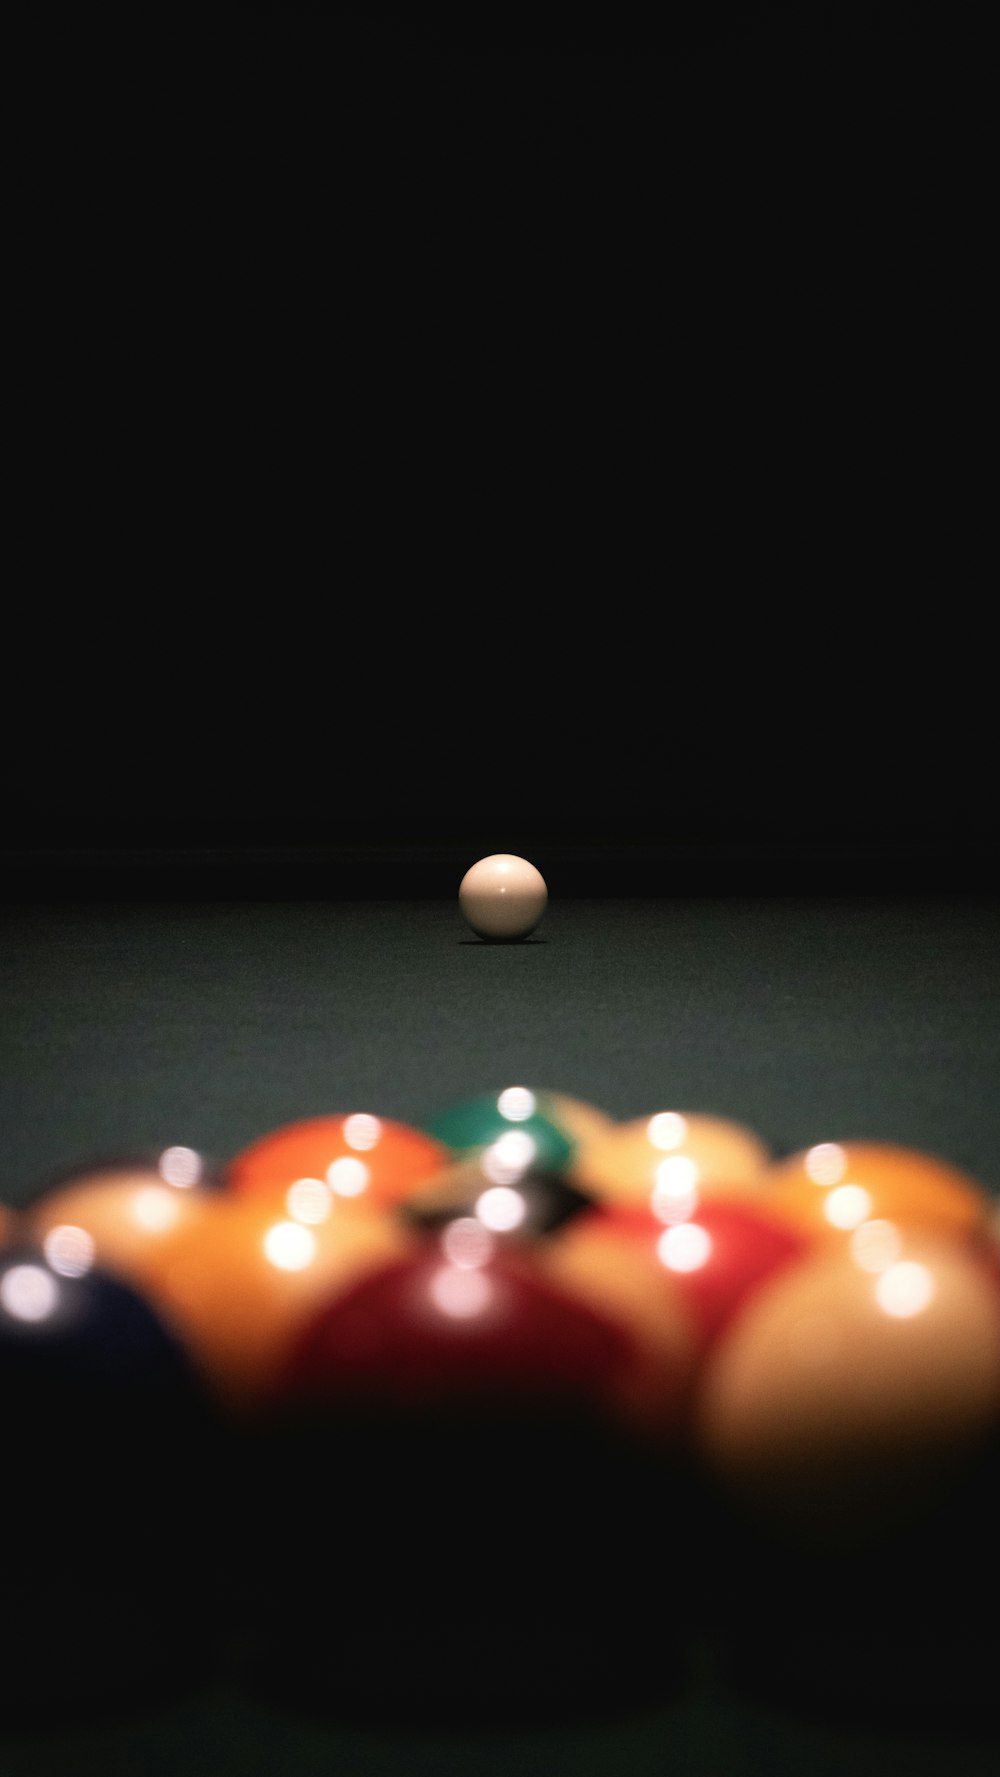 billiard balls on billiard table